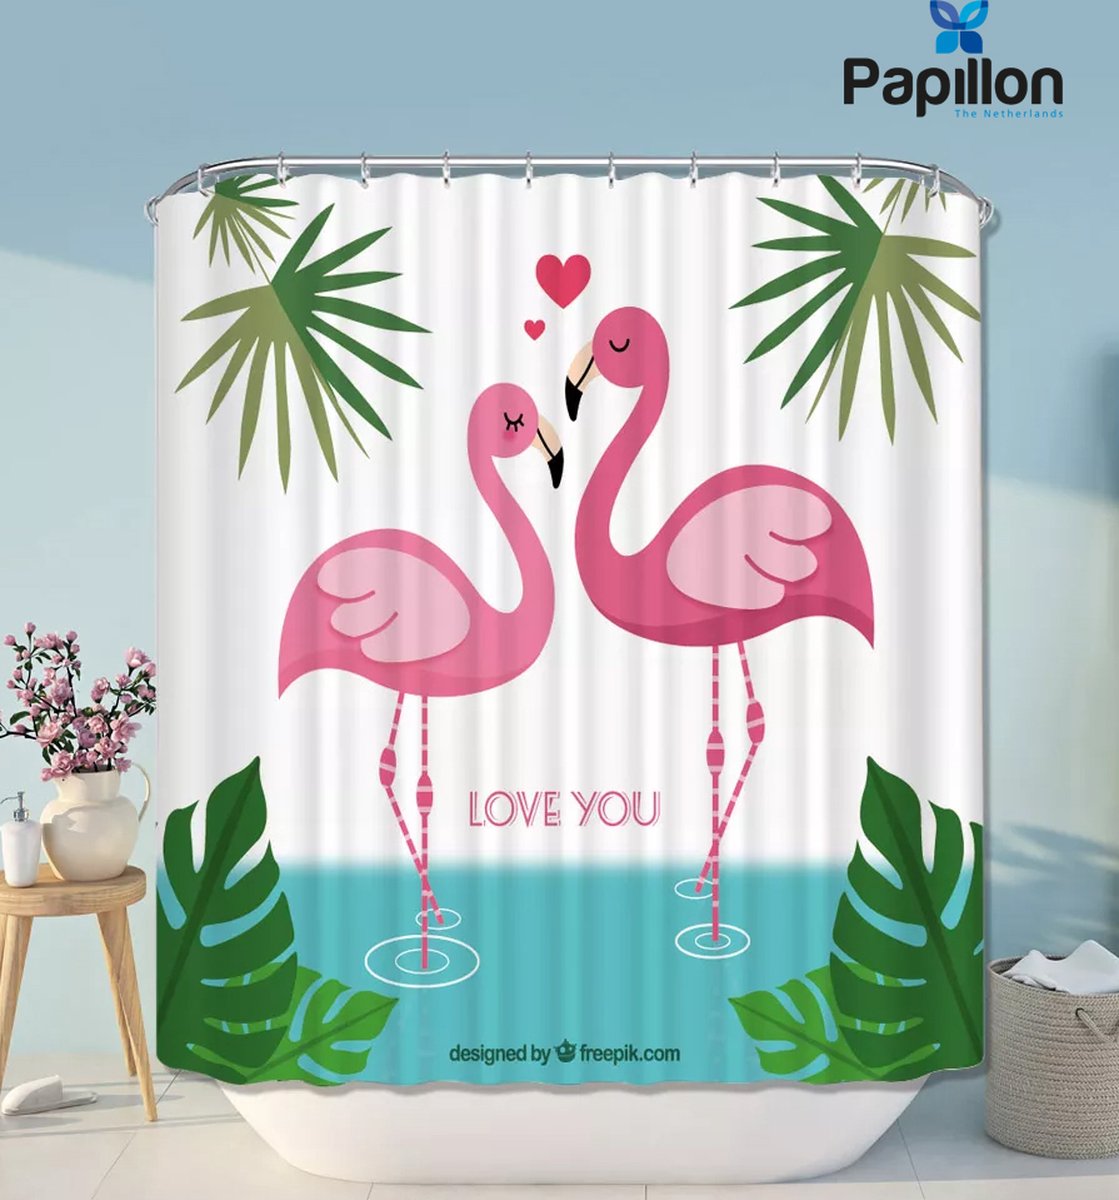 Papillon Douchegordijn - Textiel - Waterafstotend - 180x200 - Flamingo Love